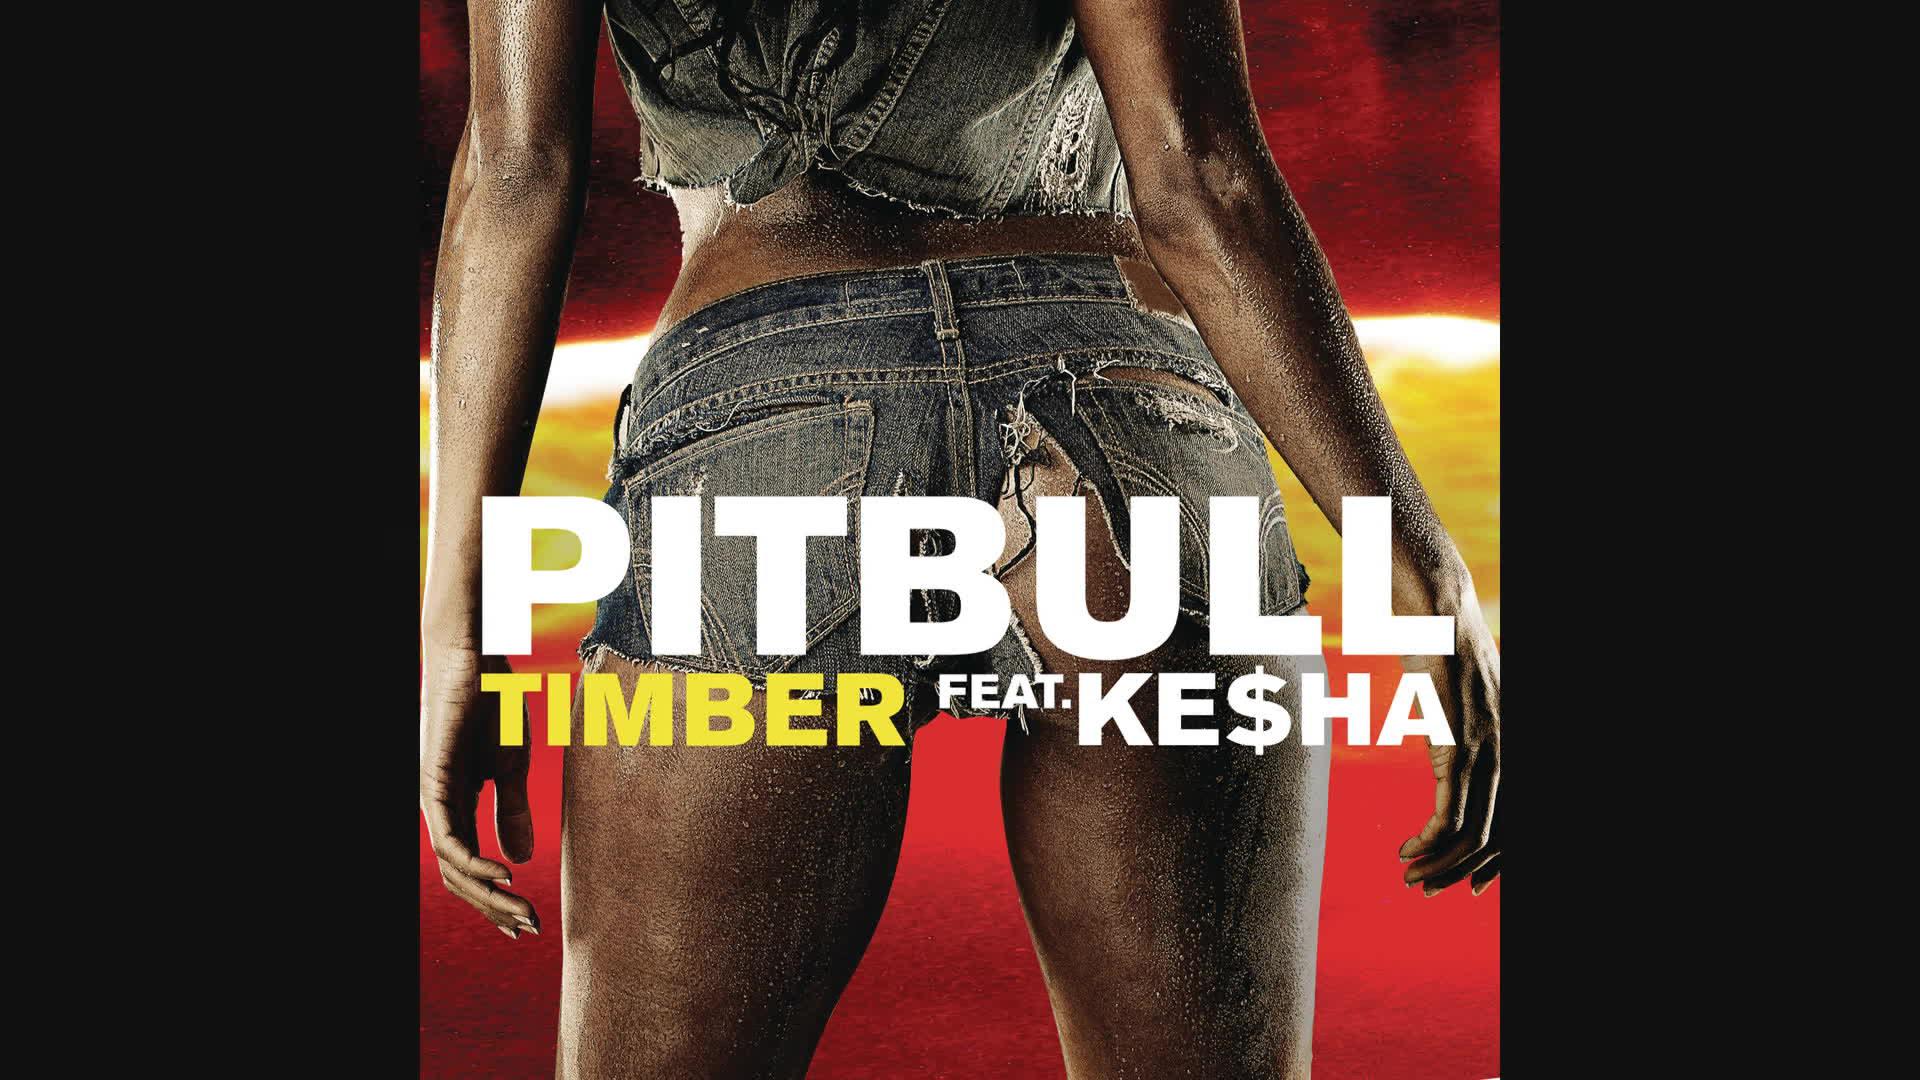 Pitbull - Timber (Audio)